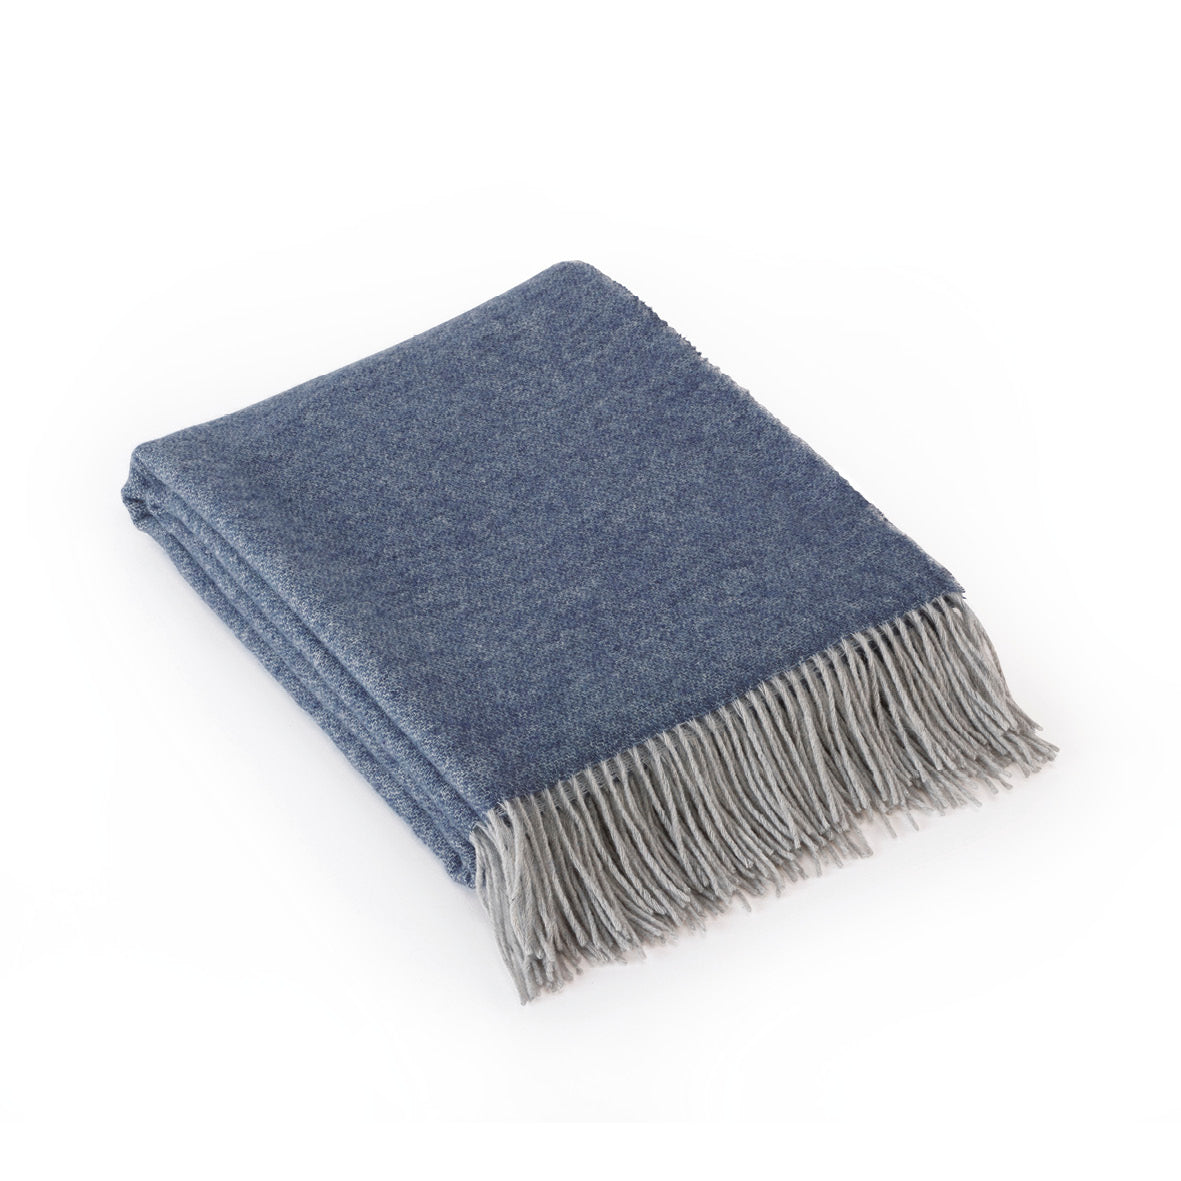 Cashmere woven plaid – 130 x 180 cm: dark blue/light grey